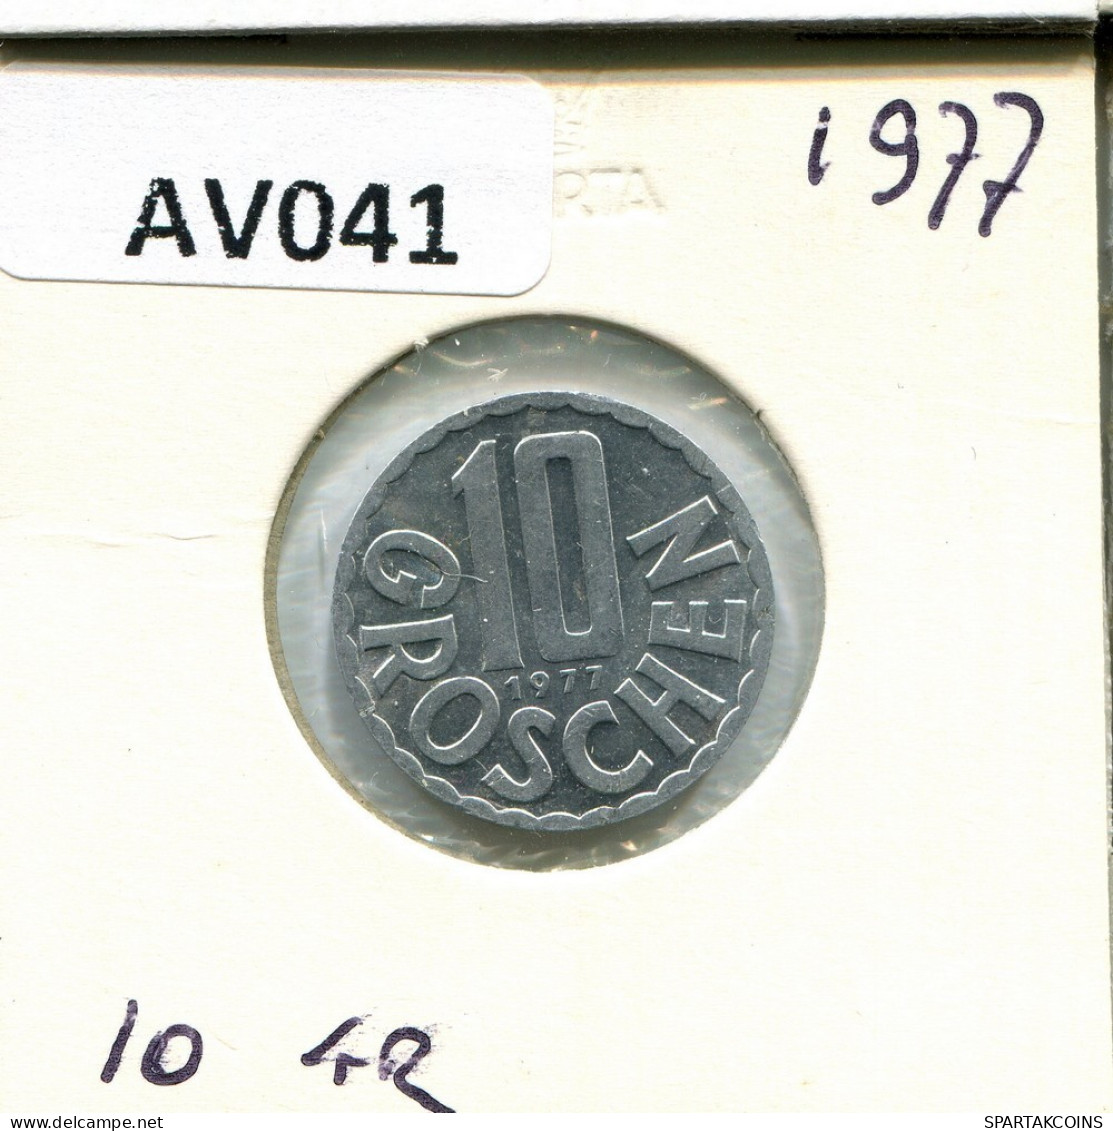 10 GROSCHEN 1977 AUSTRIA Coin #AV041.U.A - Autriche